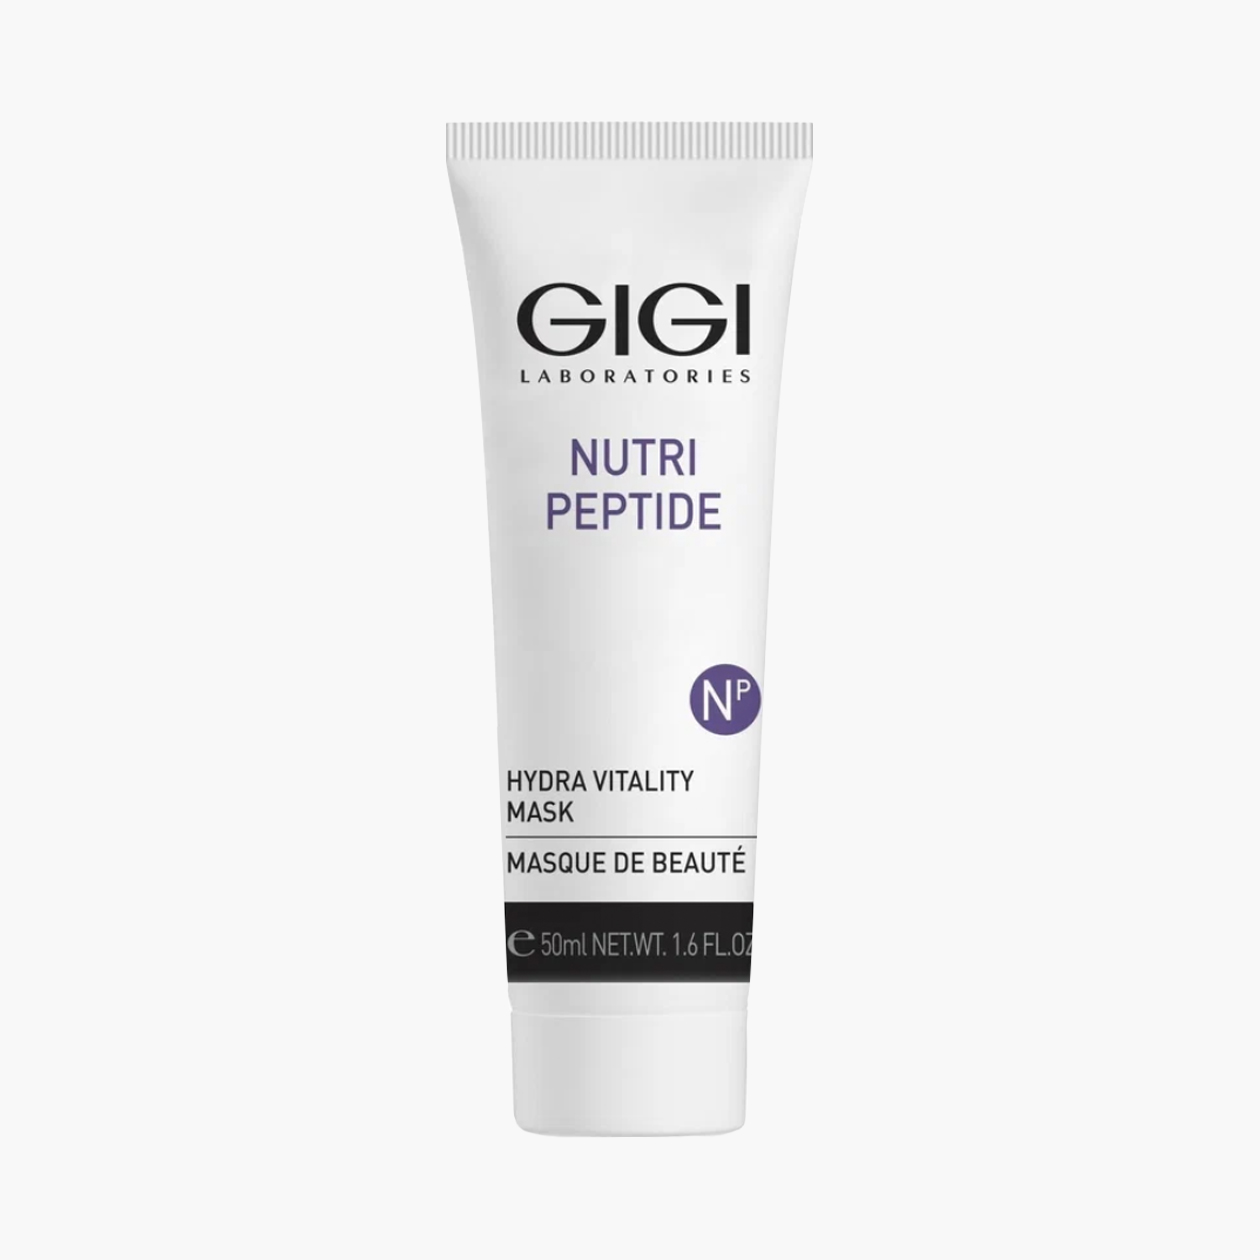 Увлажняющая маска Gigi Nutri Peptide